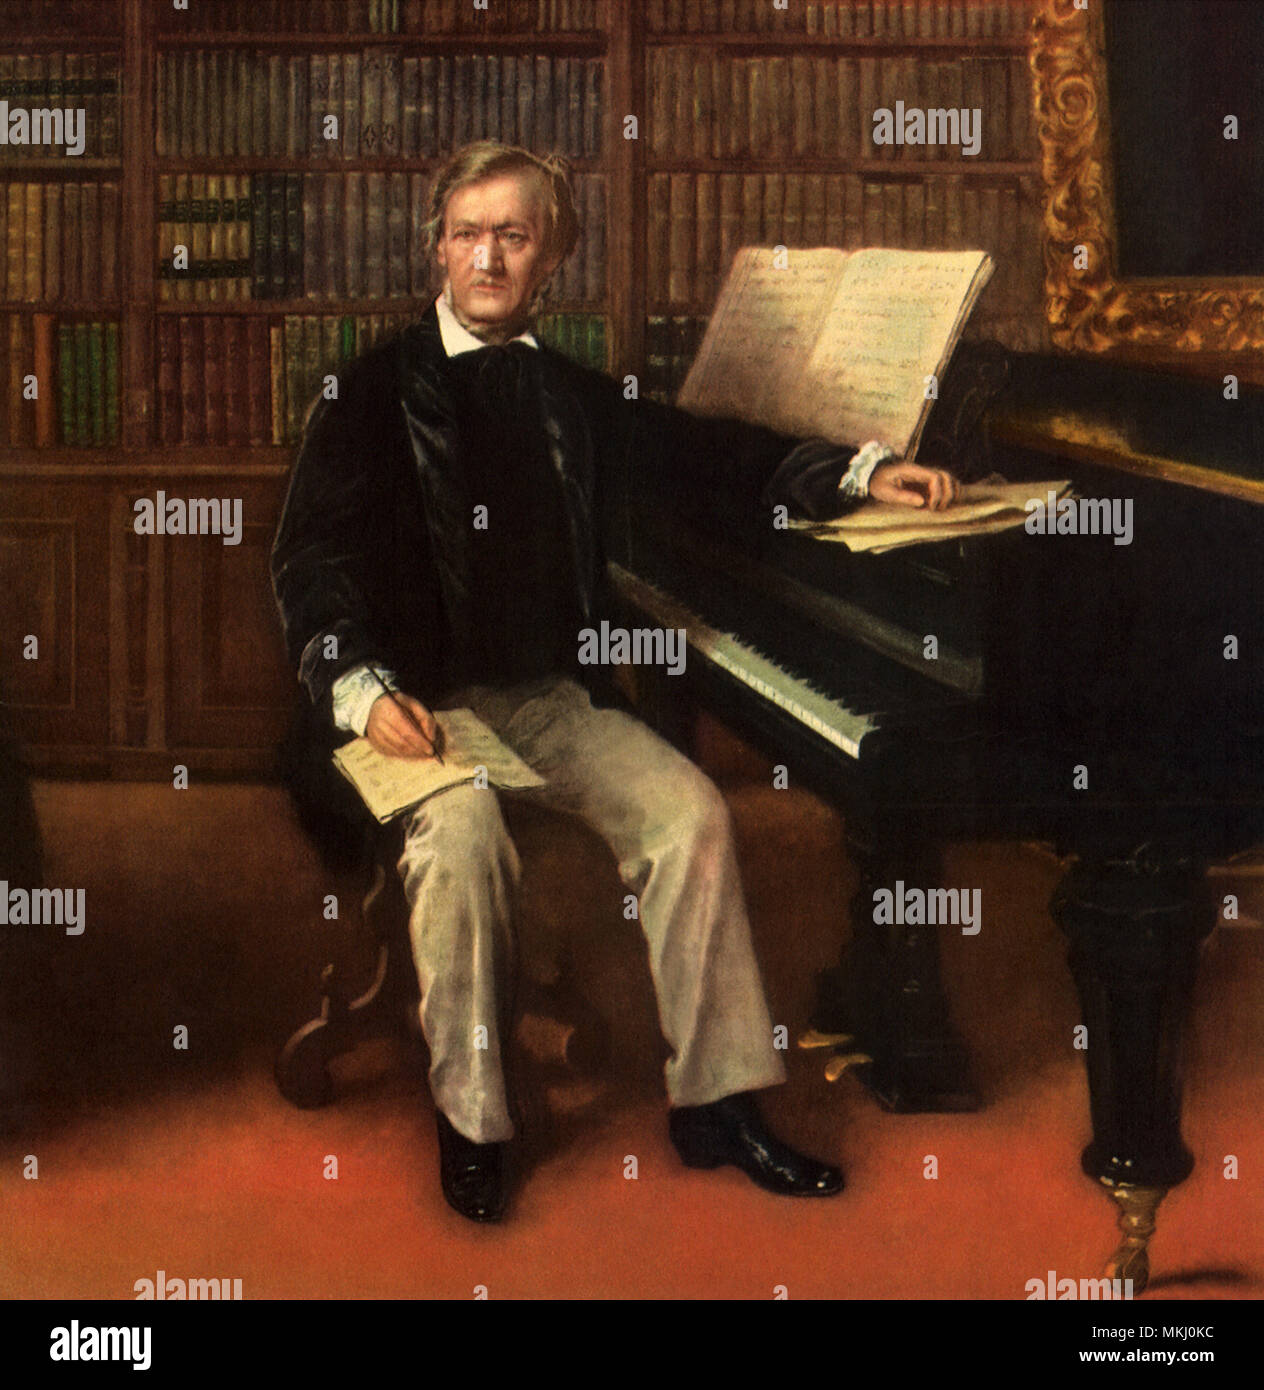 Composer at Piano Stock Photo